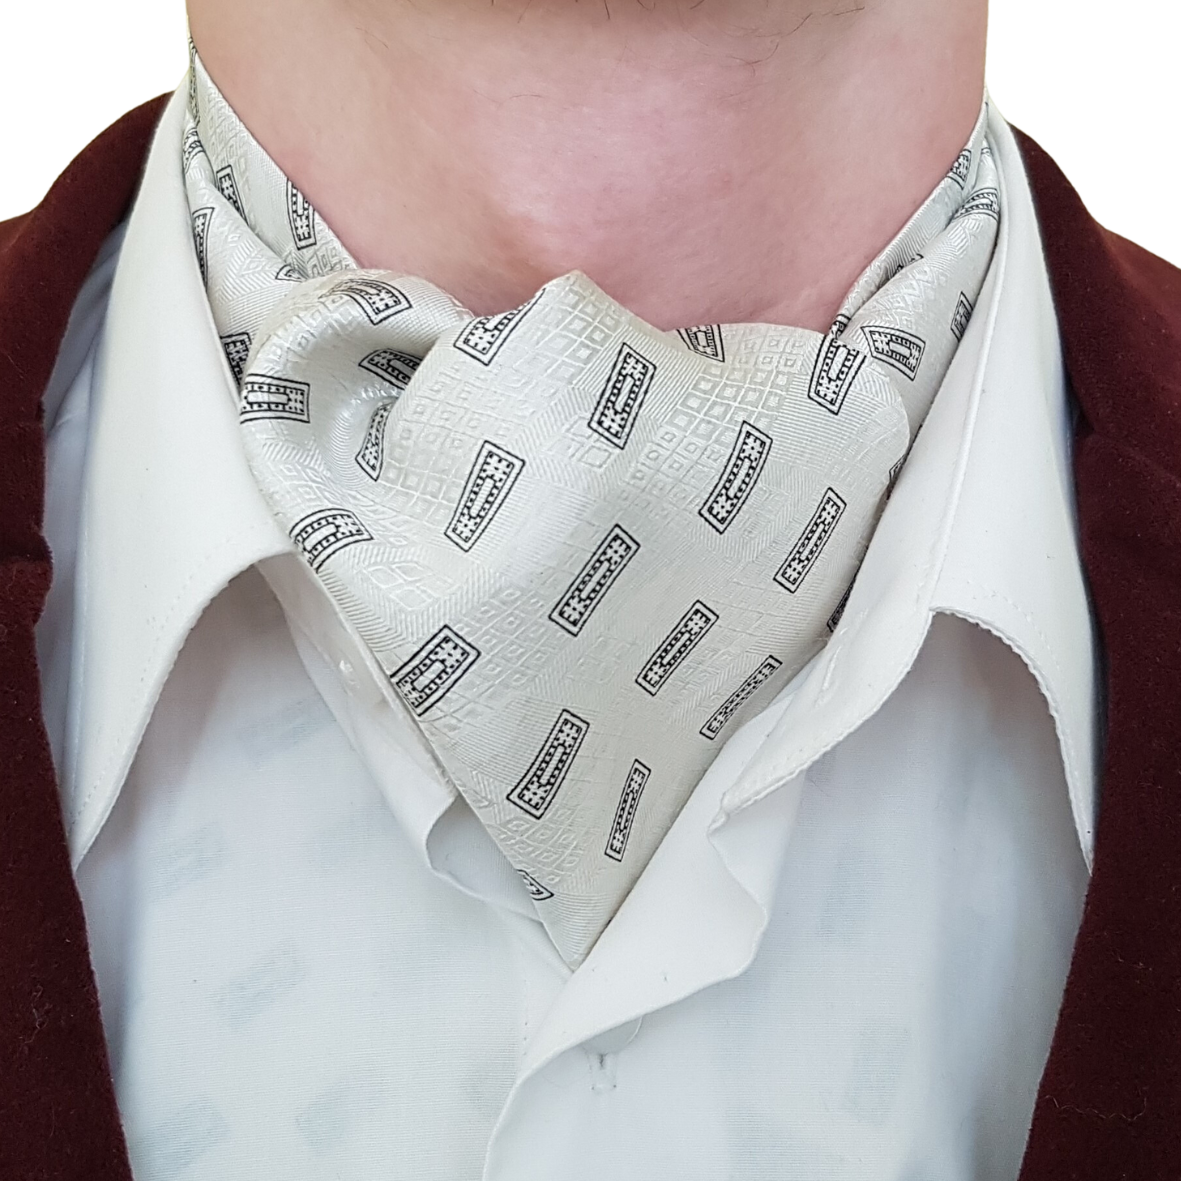 Prima Cravatta Casual ehk meeste lühike kravatt Laurencio de Abierto